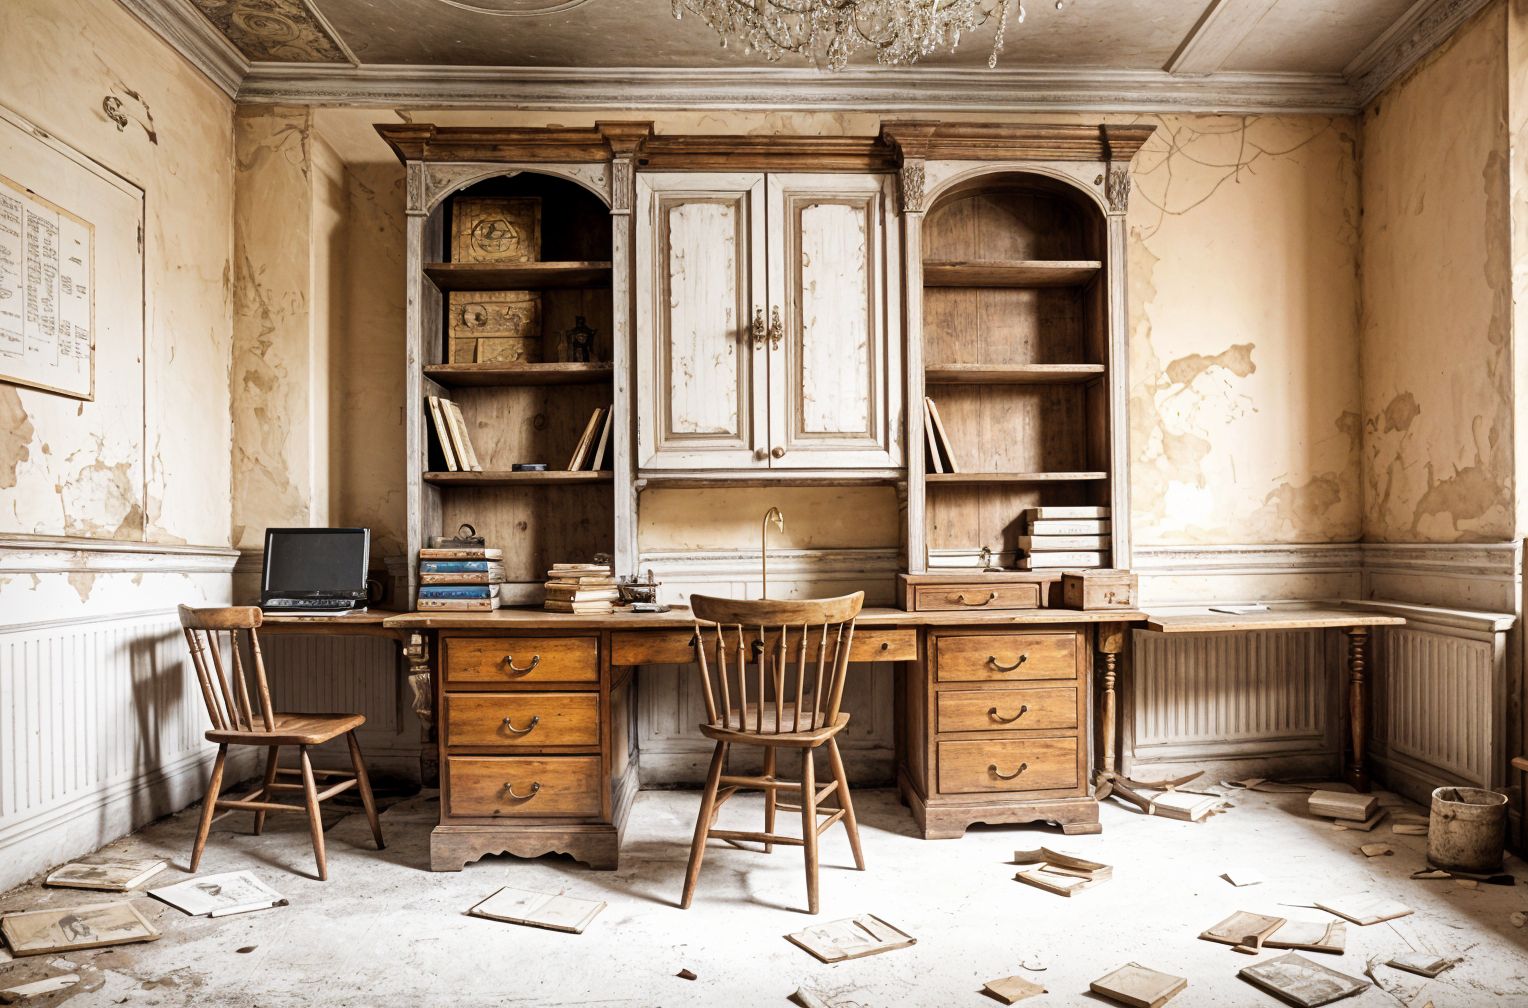 Abandoned Study Room